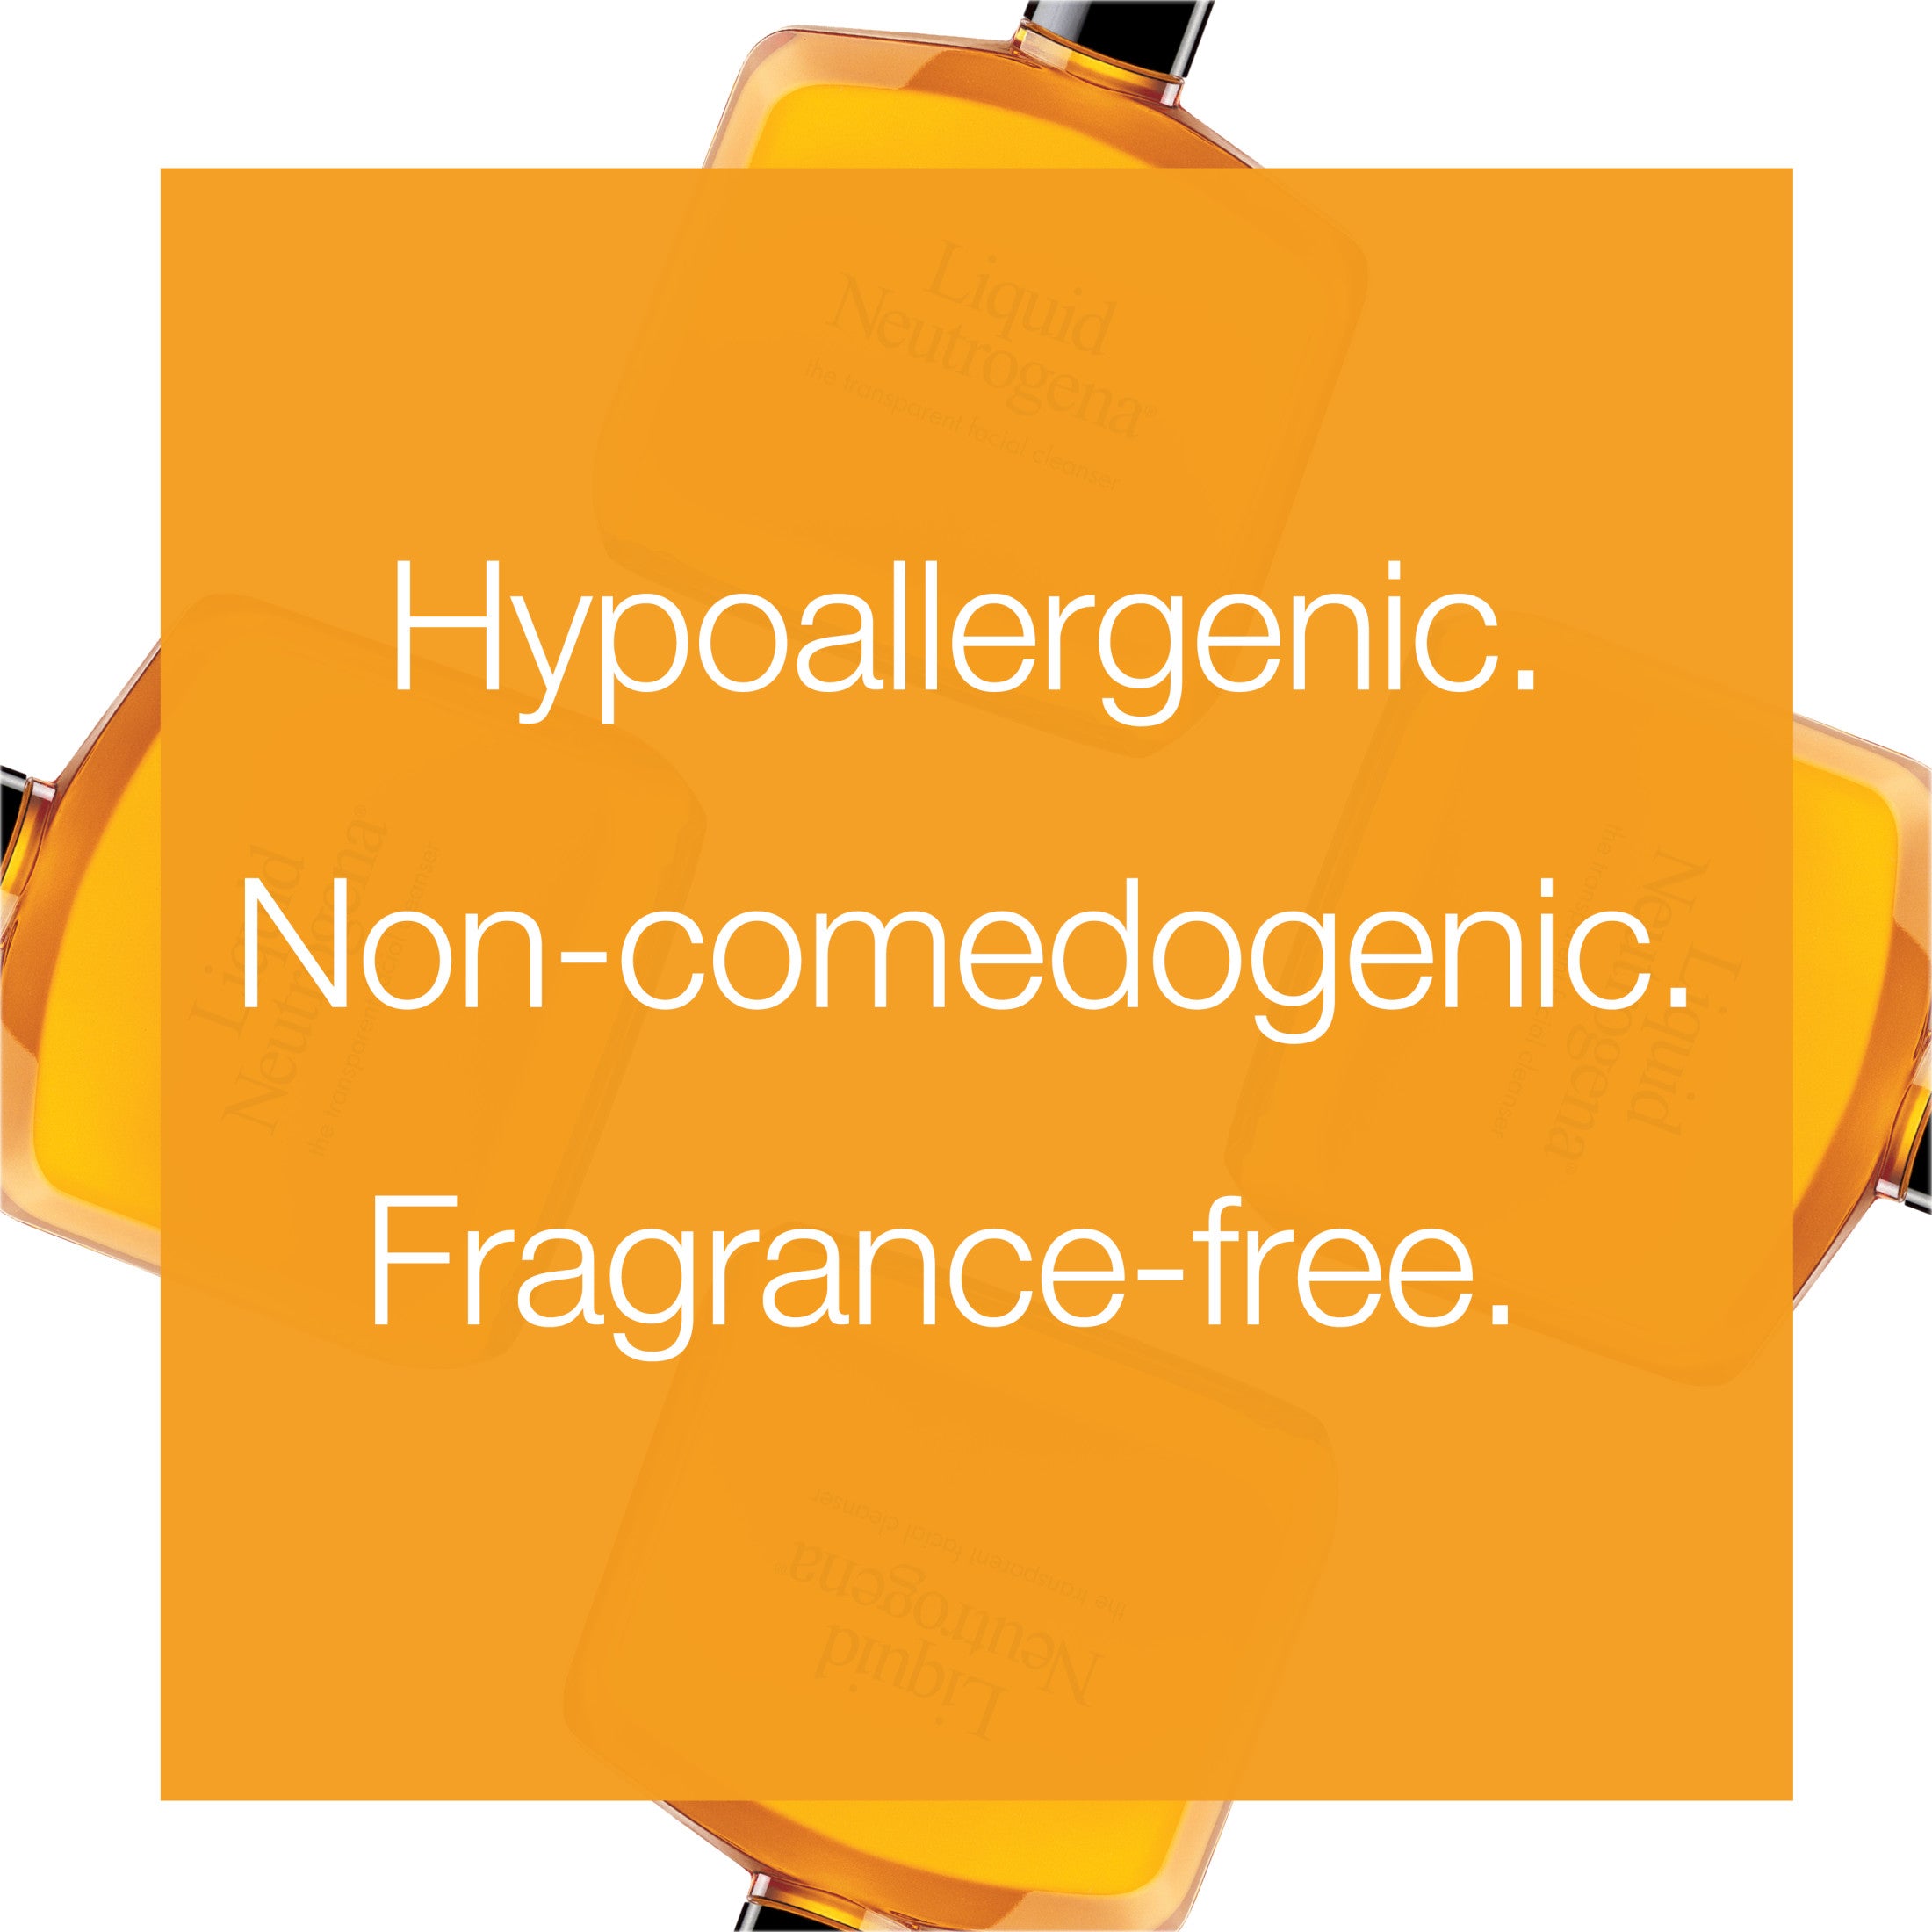 Liquid Neutrogena Fragrance-Free Mild Gentle Facial Cleanser, 8 fl. oz | MTTS268